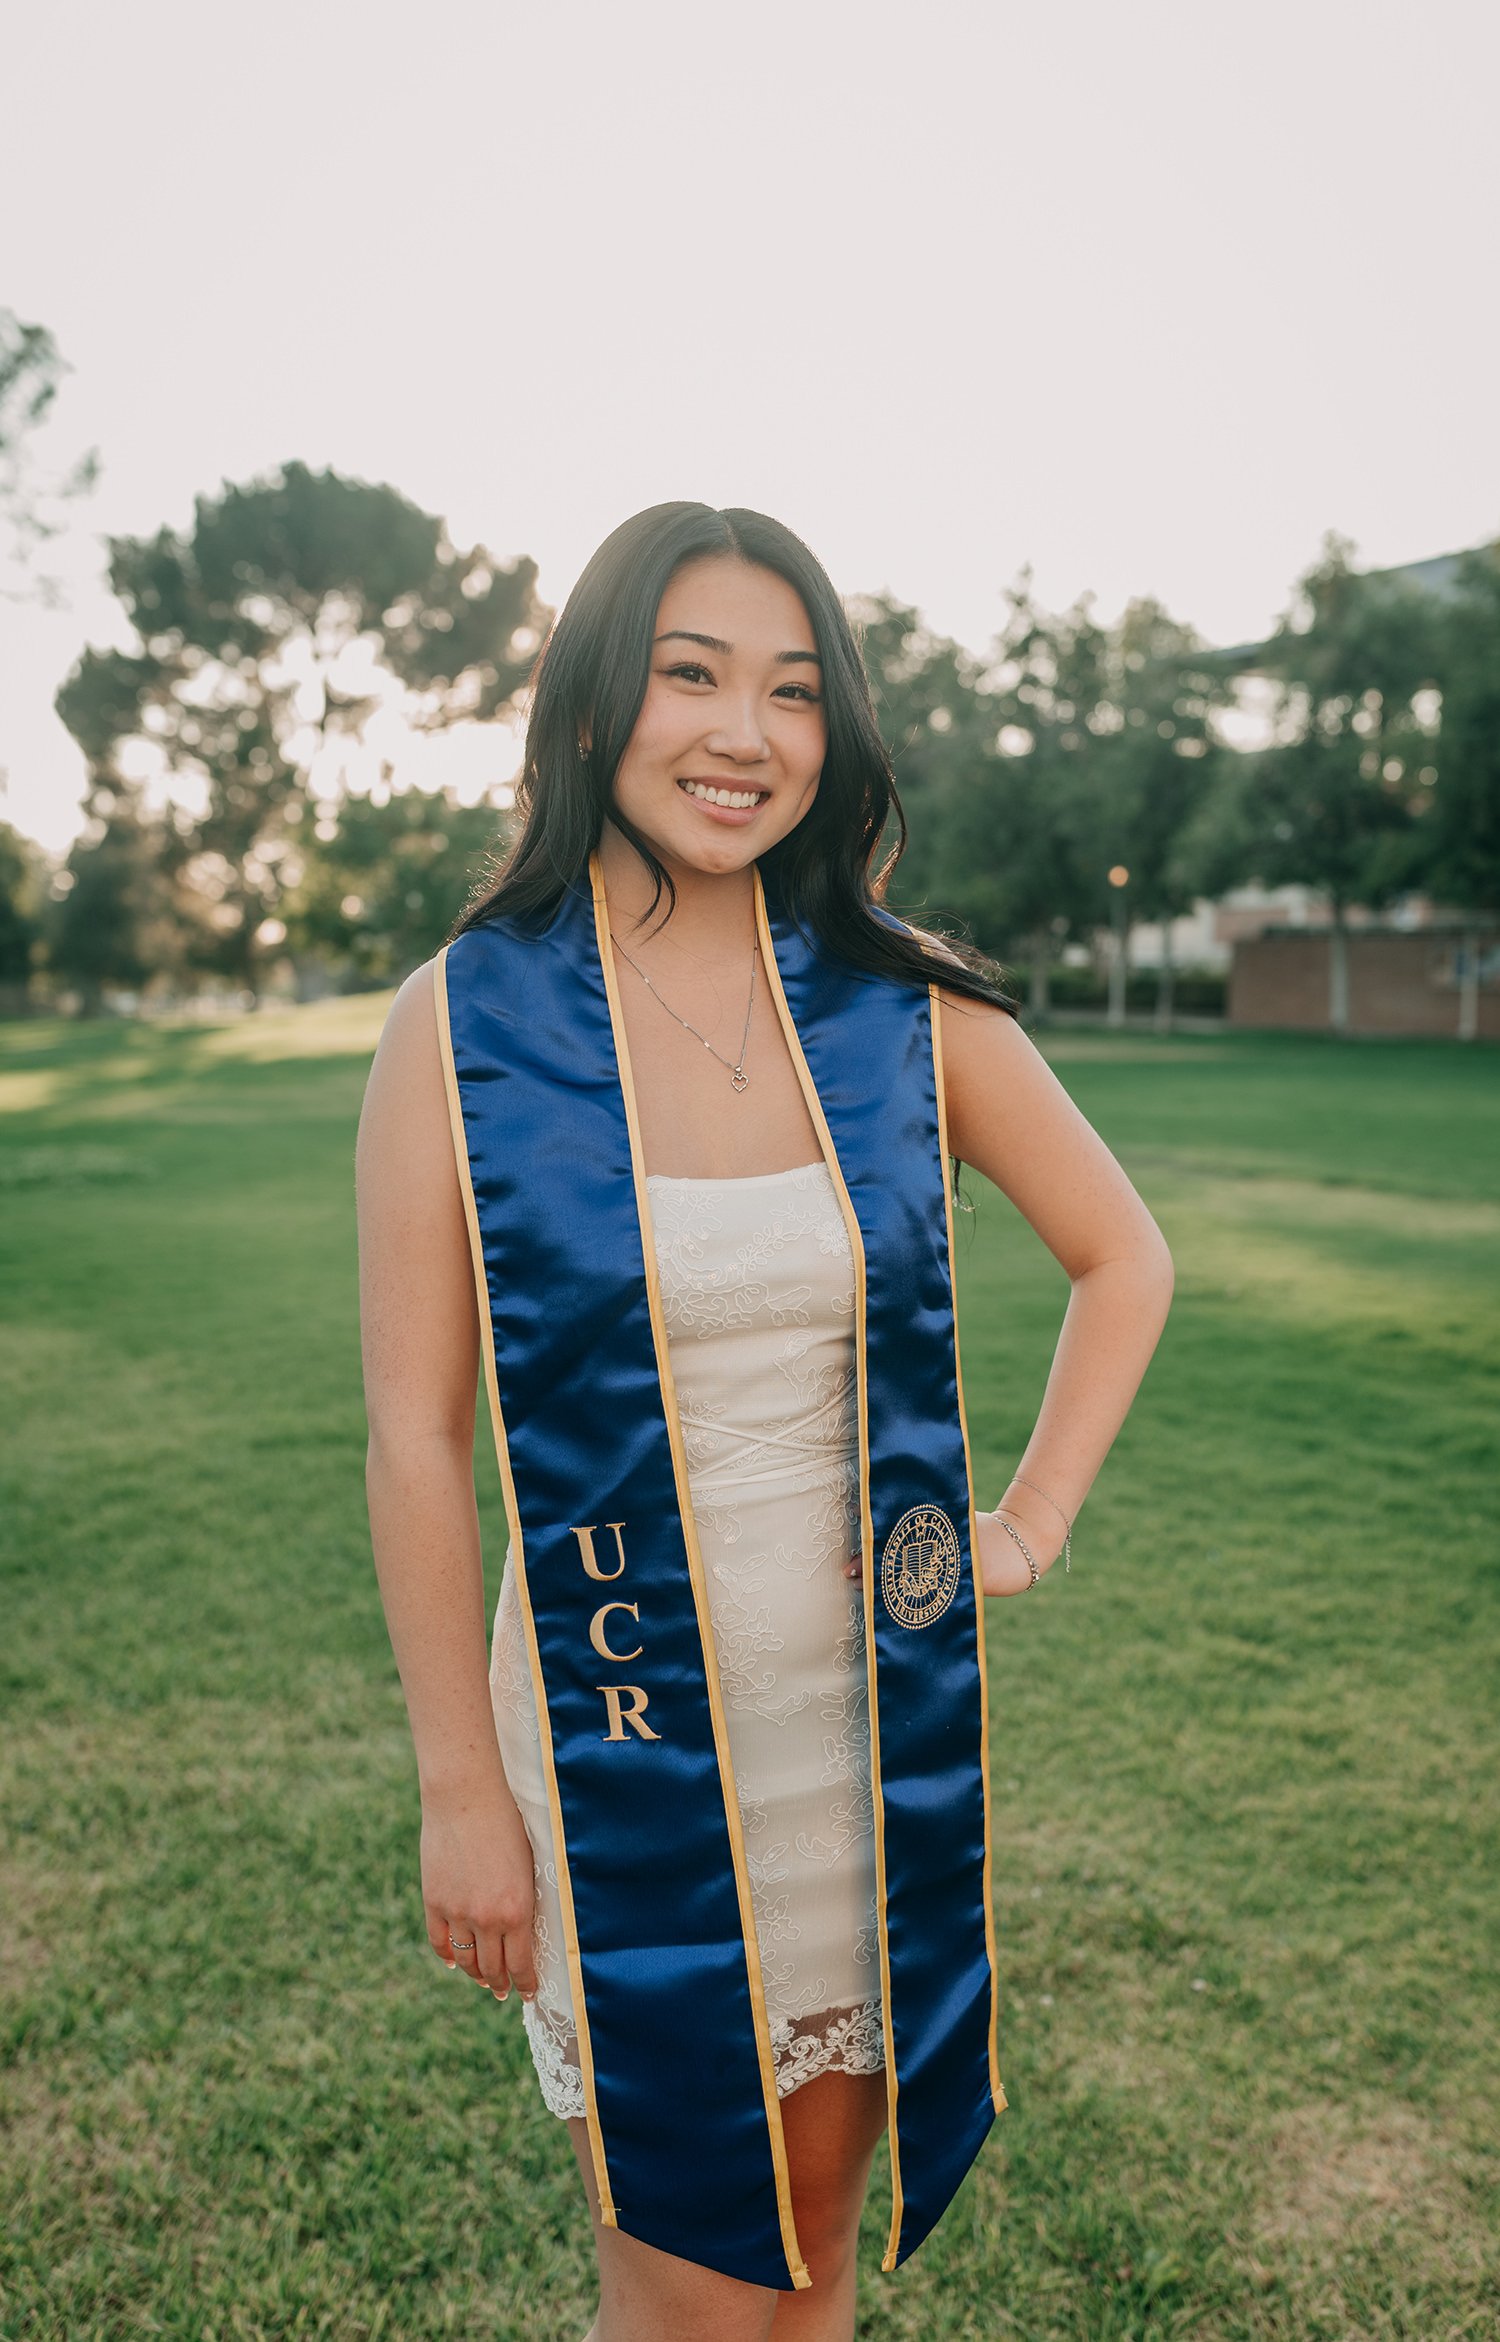 ucr-graduation-portrait-riverside-california-photographer-25.jpg